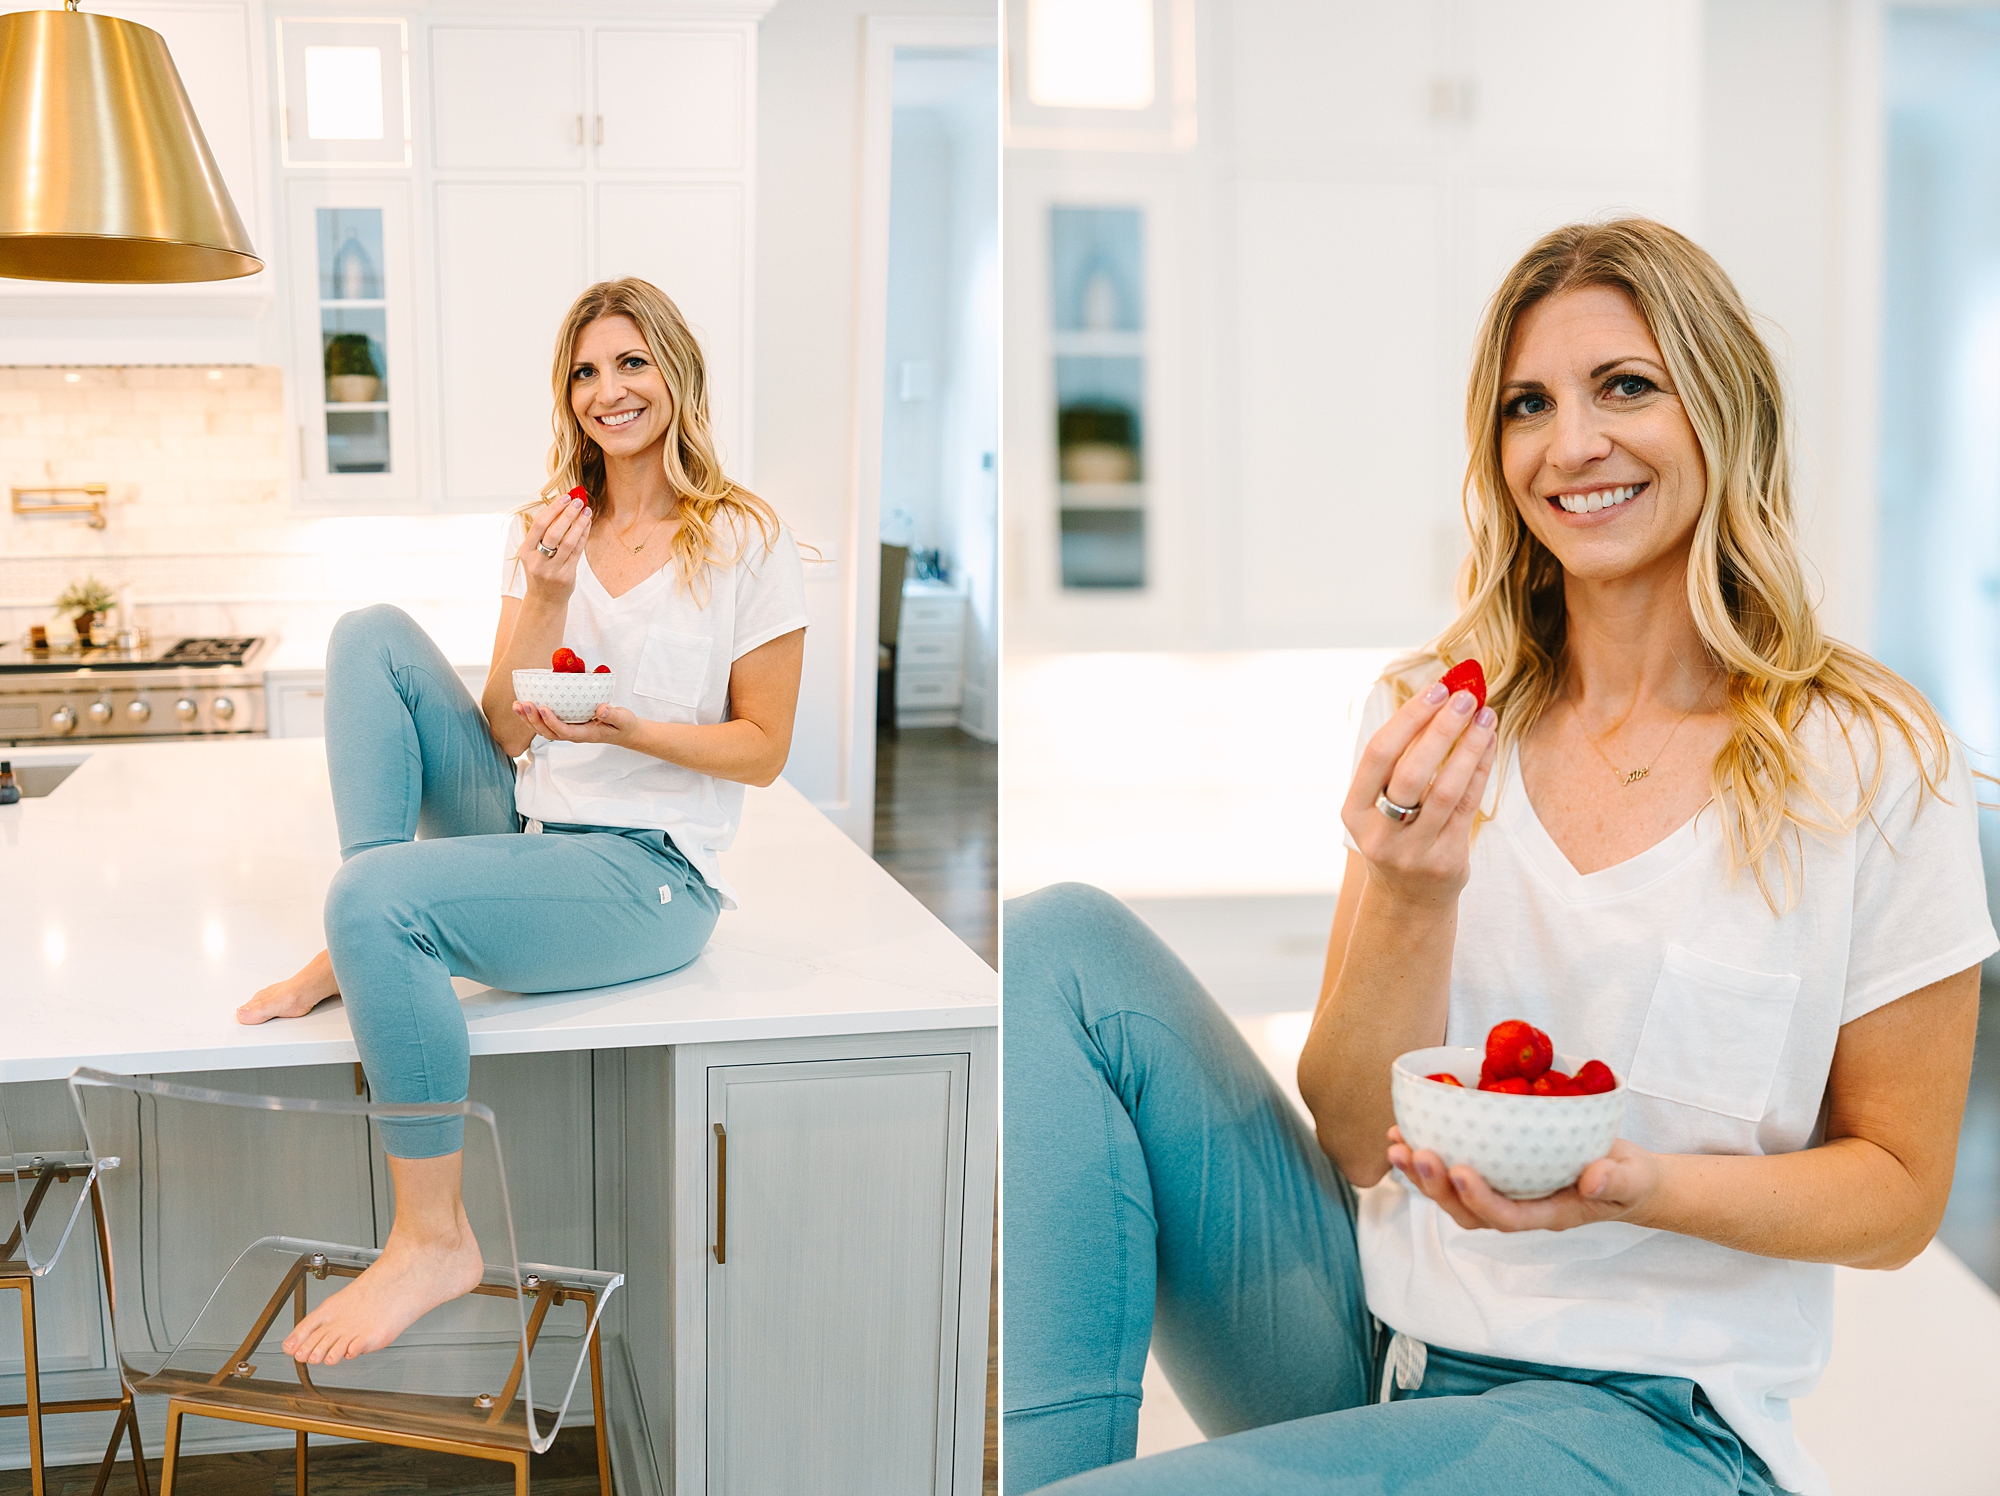 health coach sits in kitchen eating raspberries